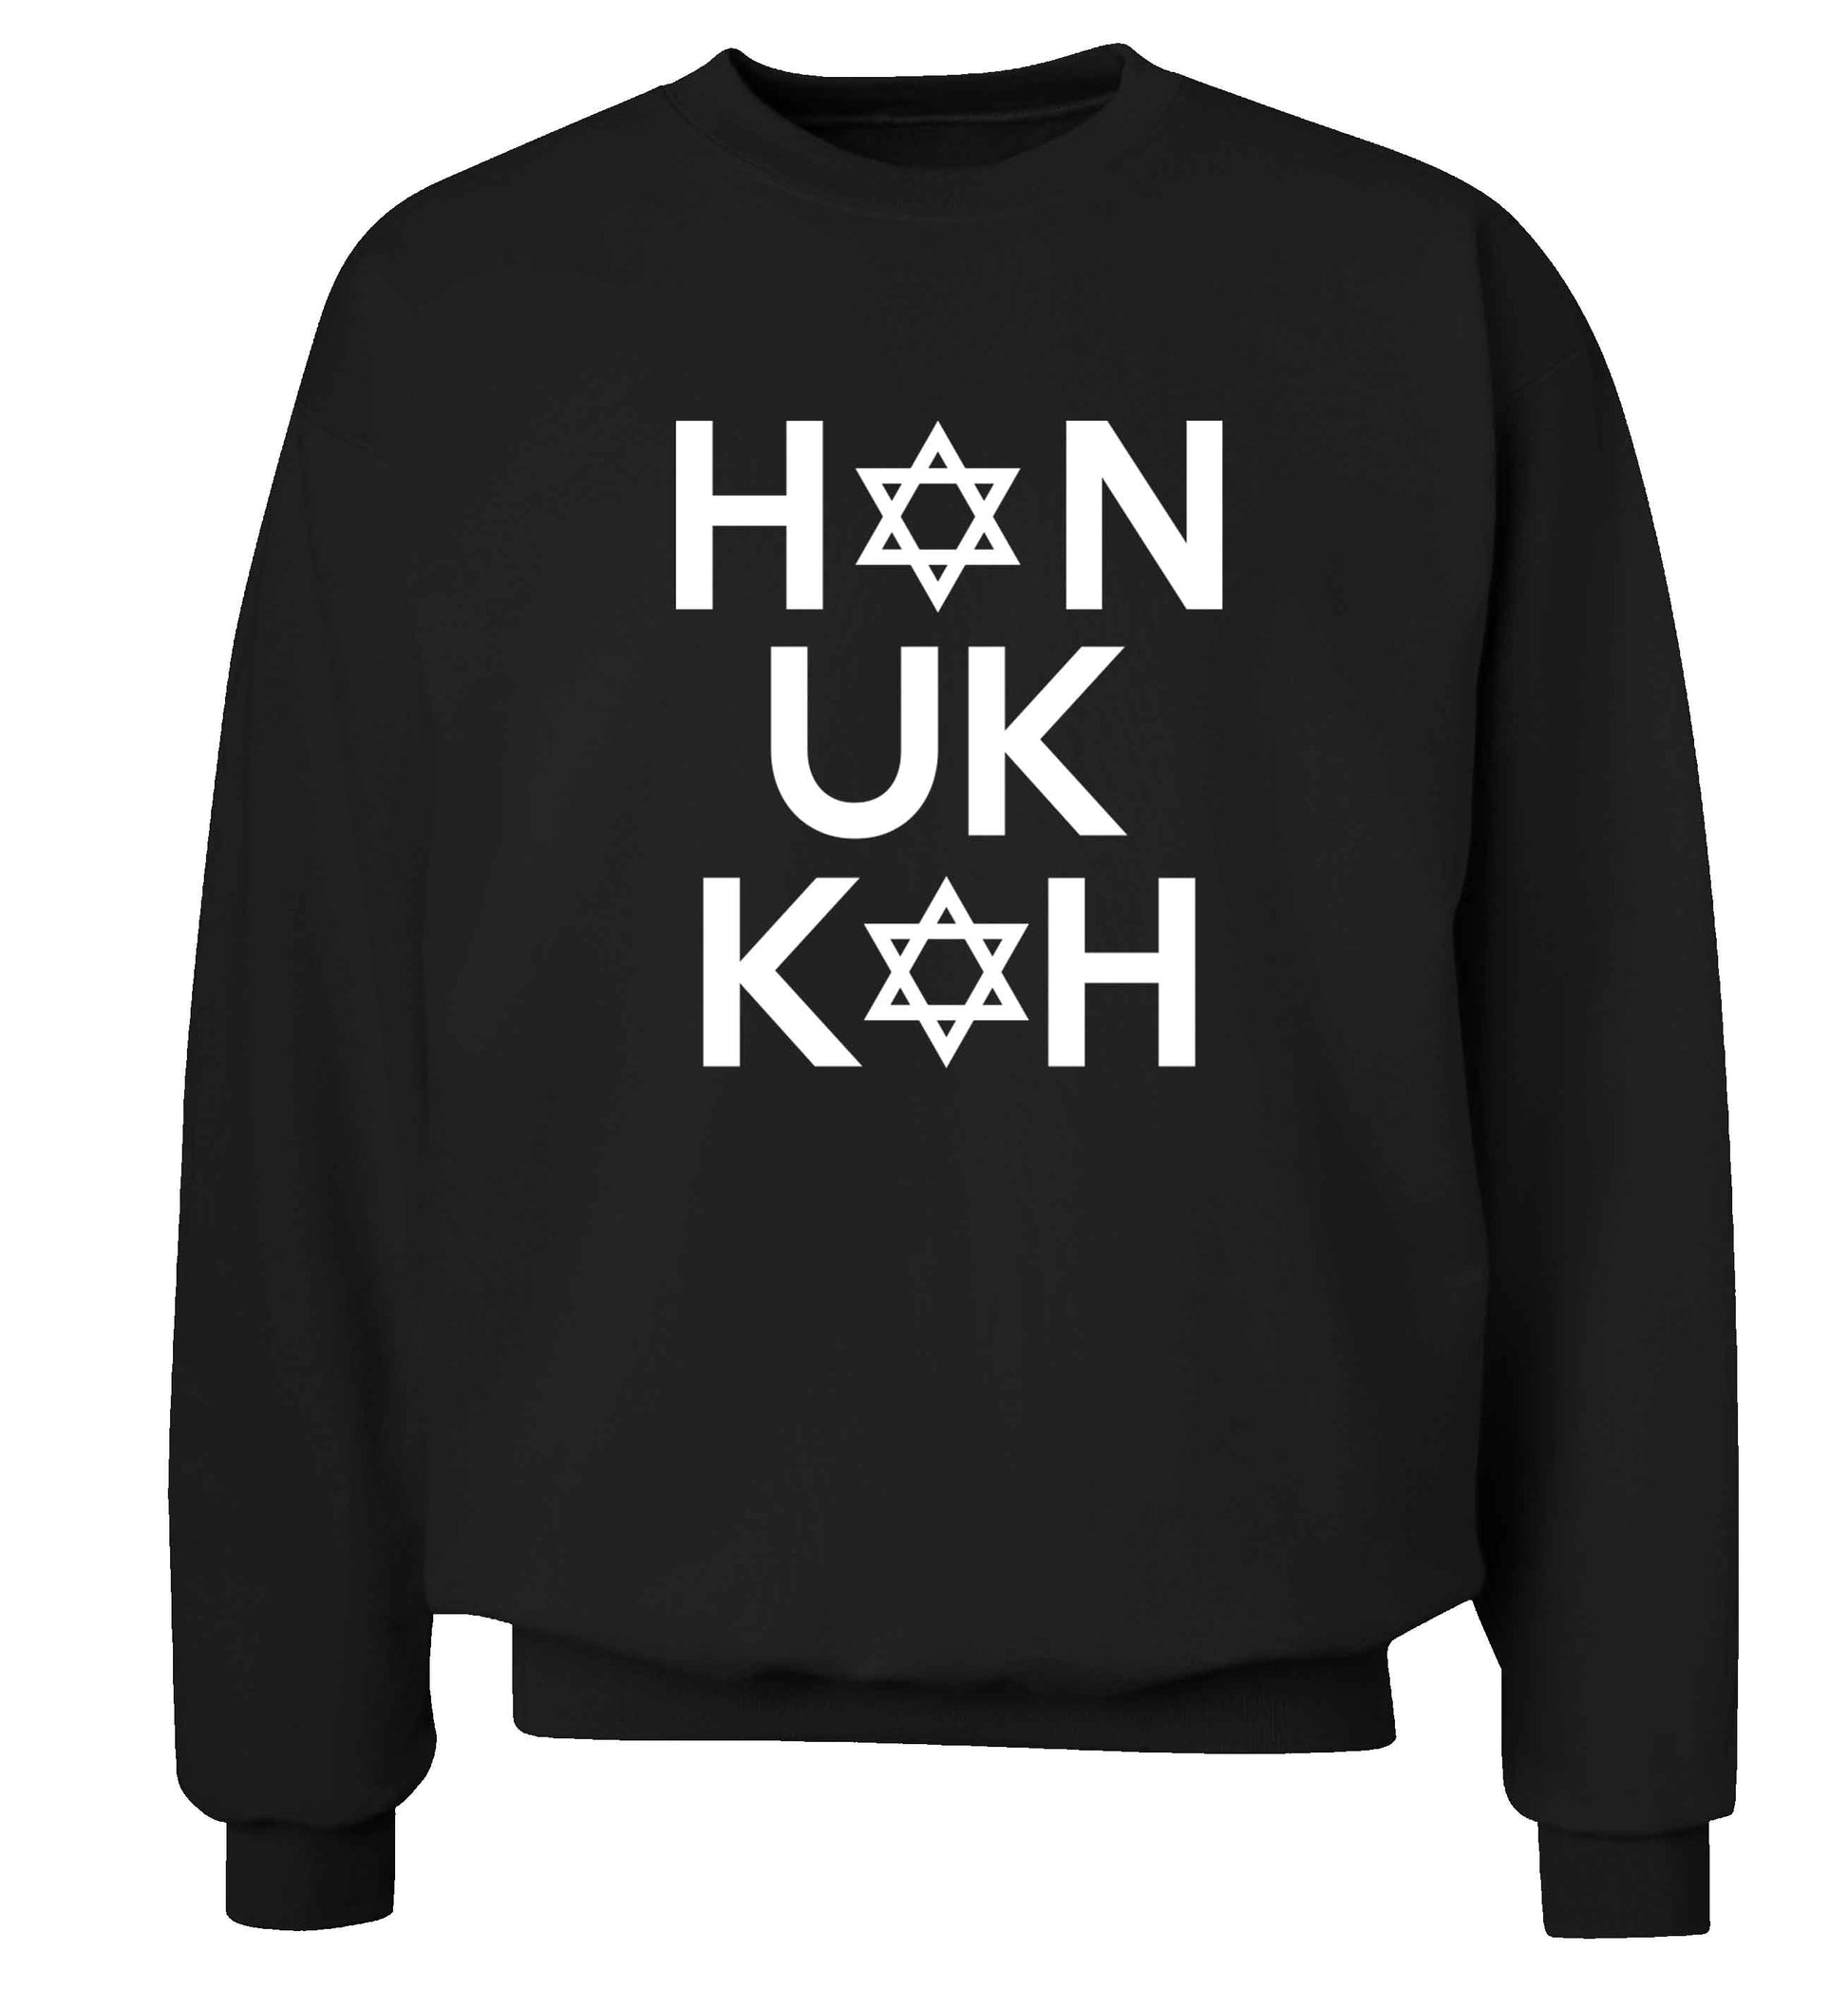 Han uk kah  Hanukkah star of david adult's unisex black sweater 2XL